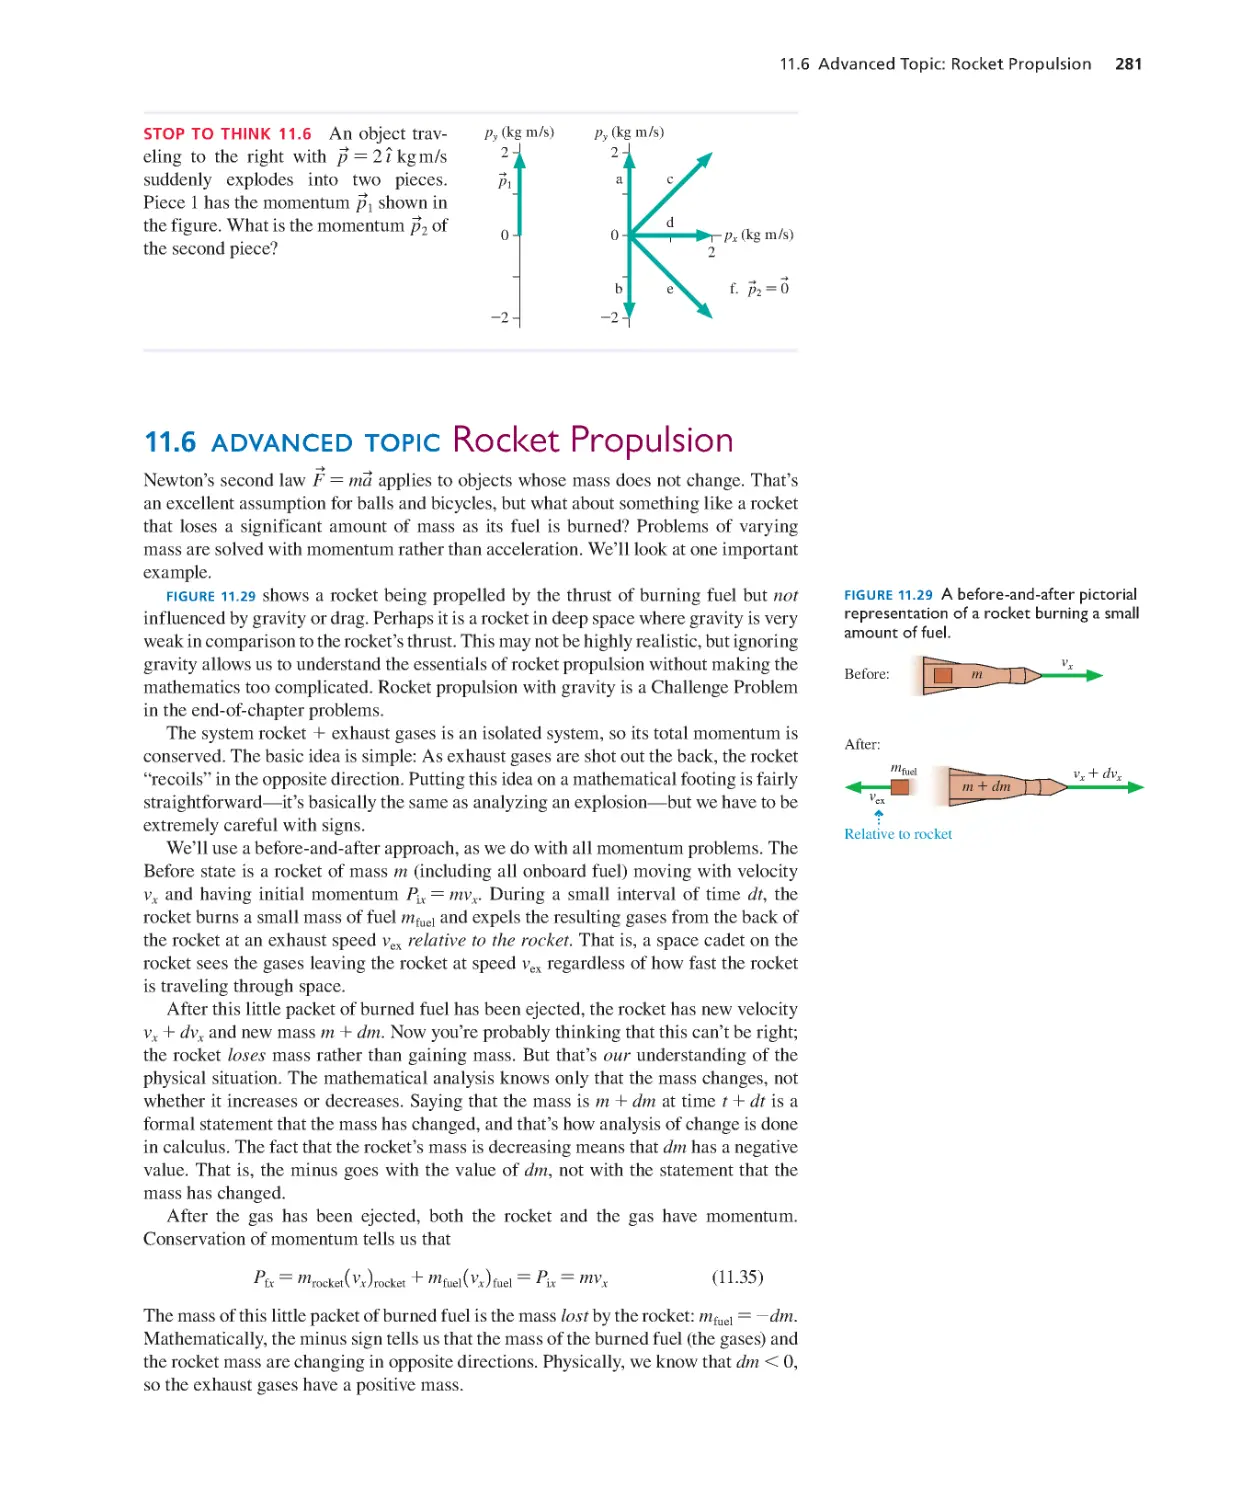 11.6. Advanced Topic: Rocket Propulsion